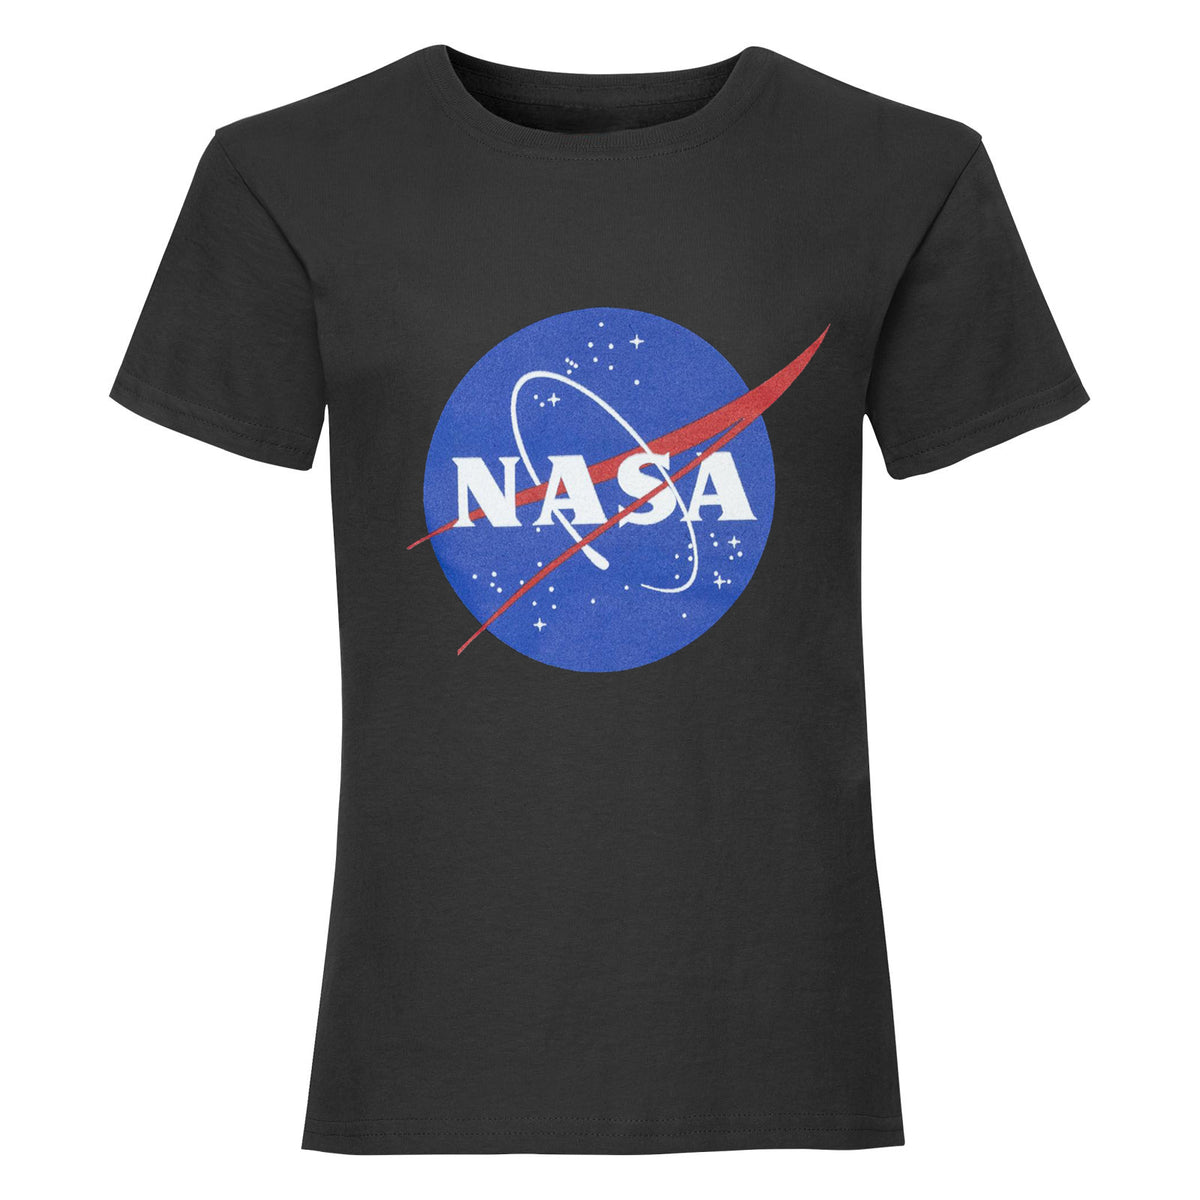 NASA Girls Classic Logo T-Shirt | Discounts on great Brands